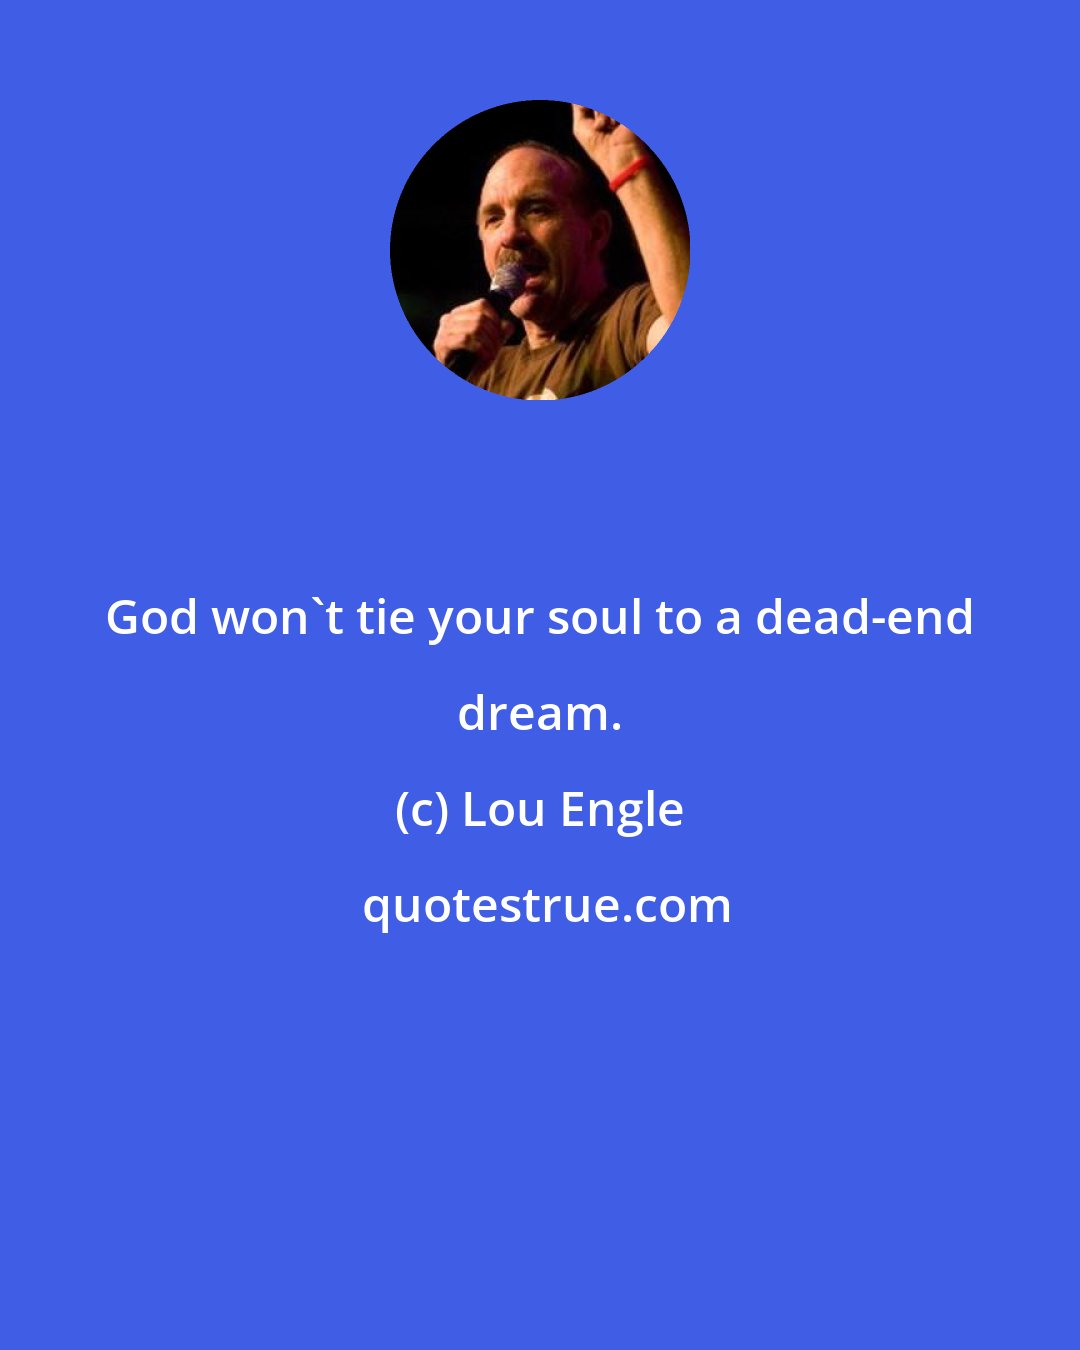 Lou Engle: God won't tie your soul to a dead-end dream.